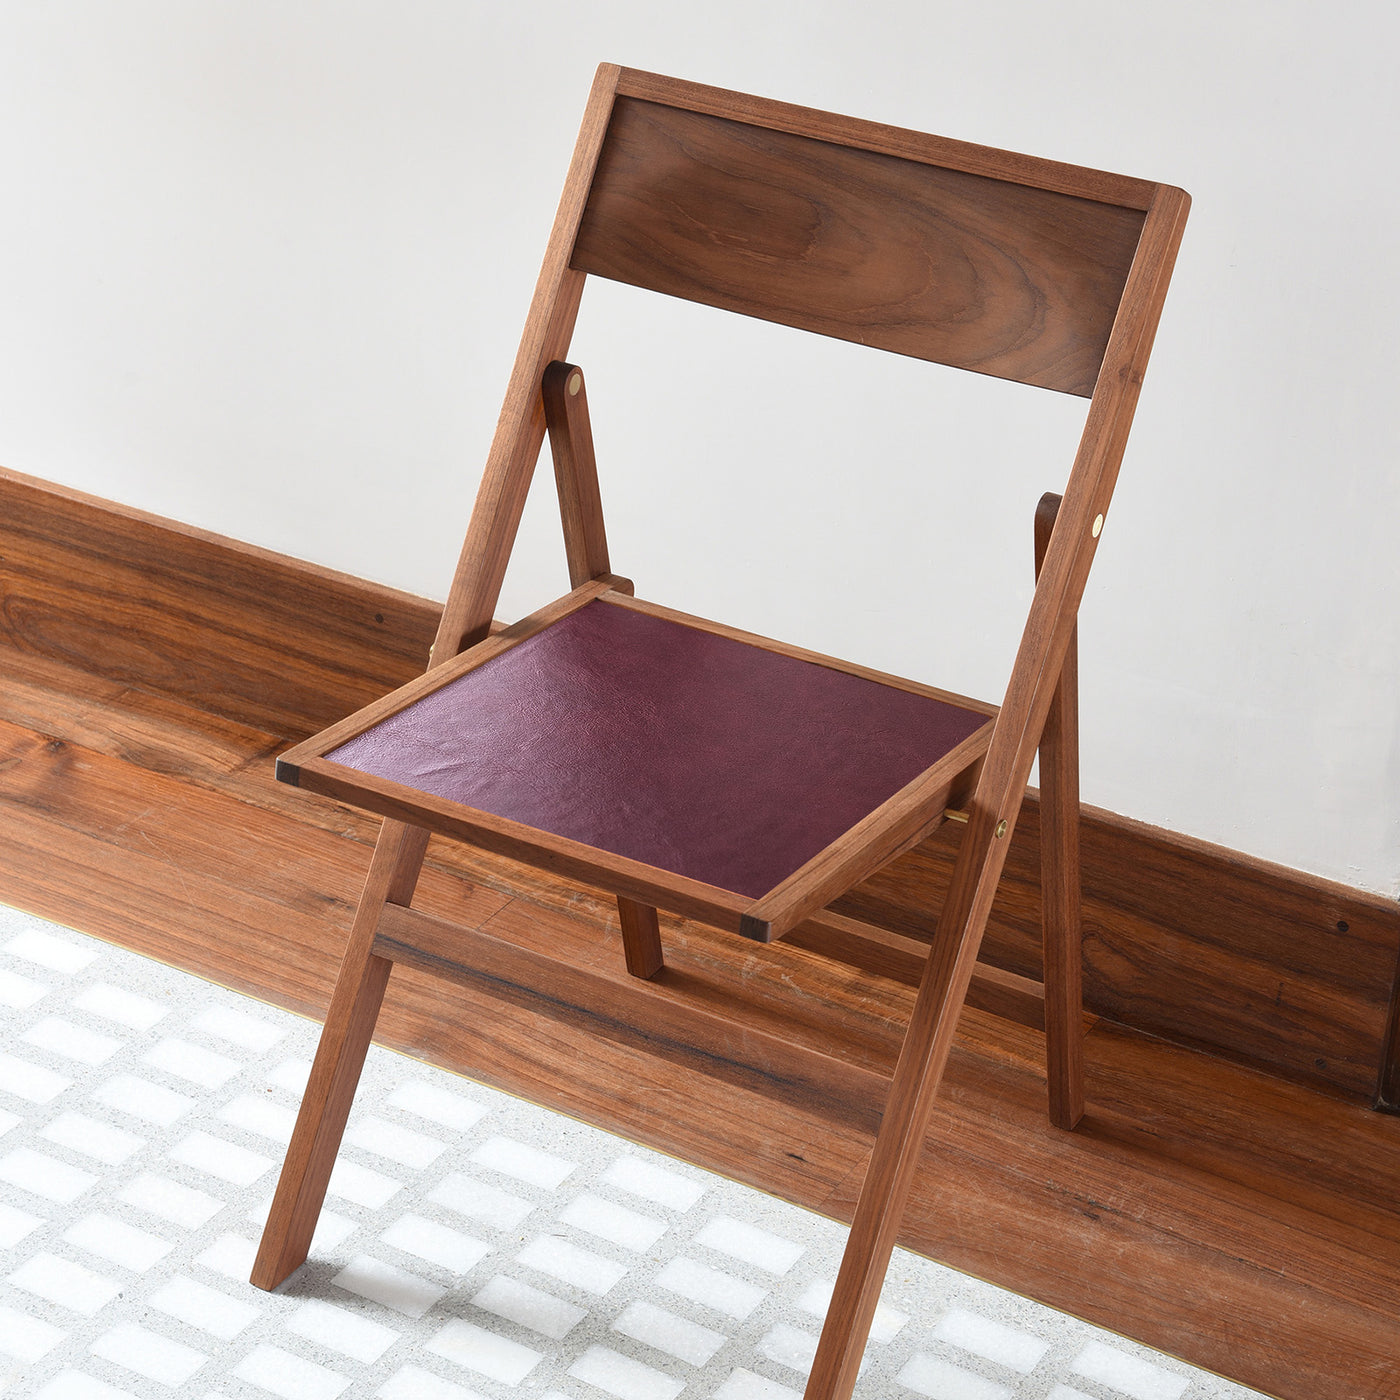 Designer Folding Flat Chair – Teak Seat